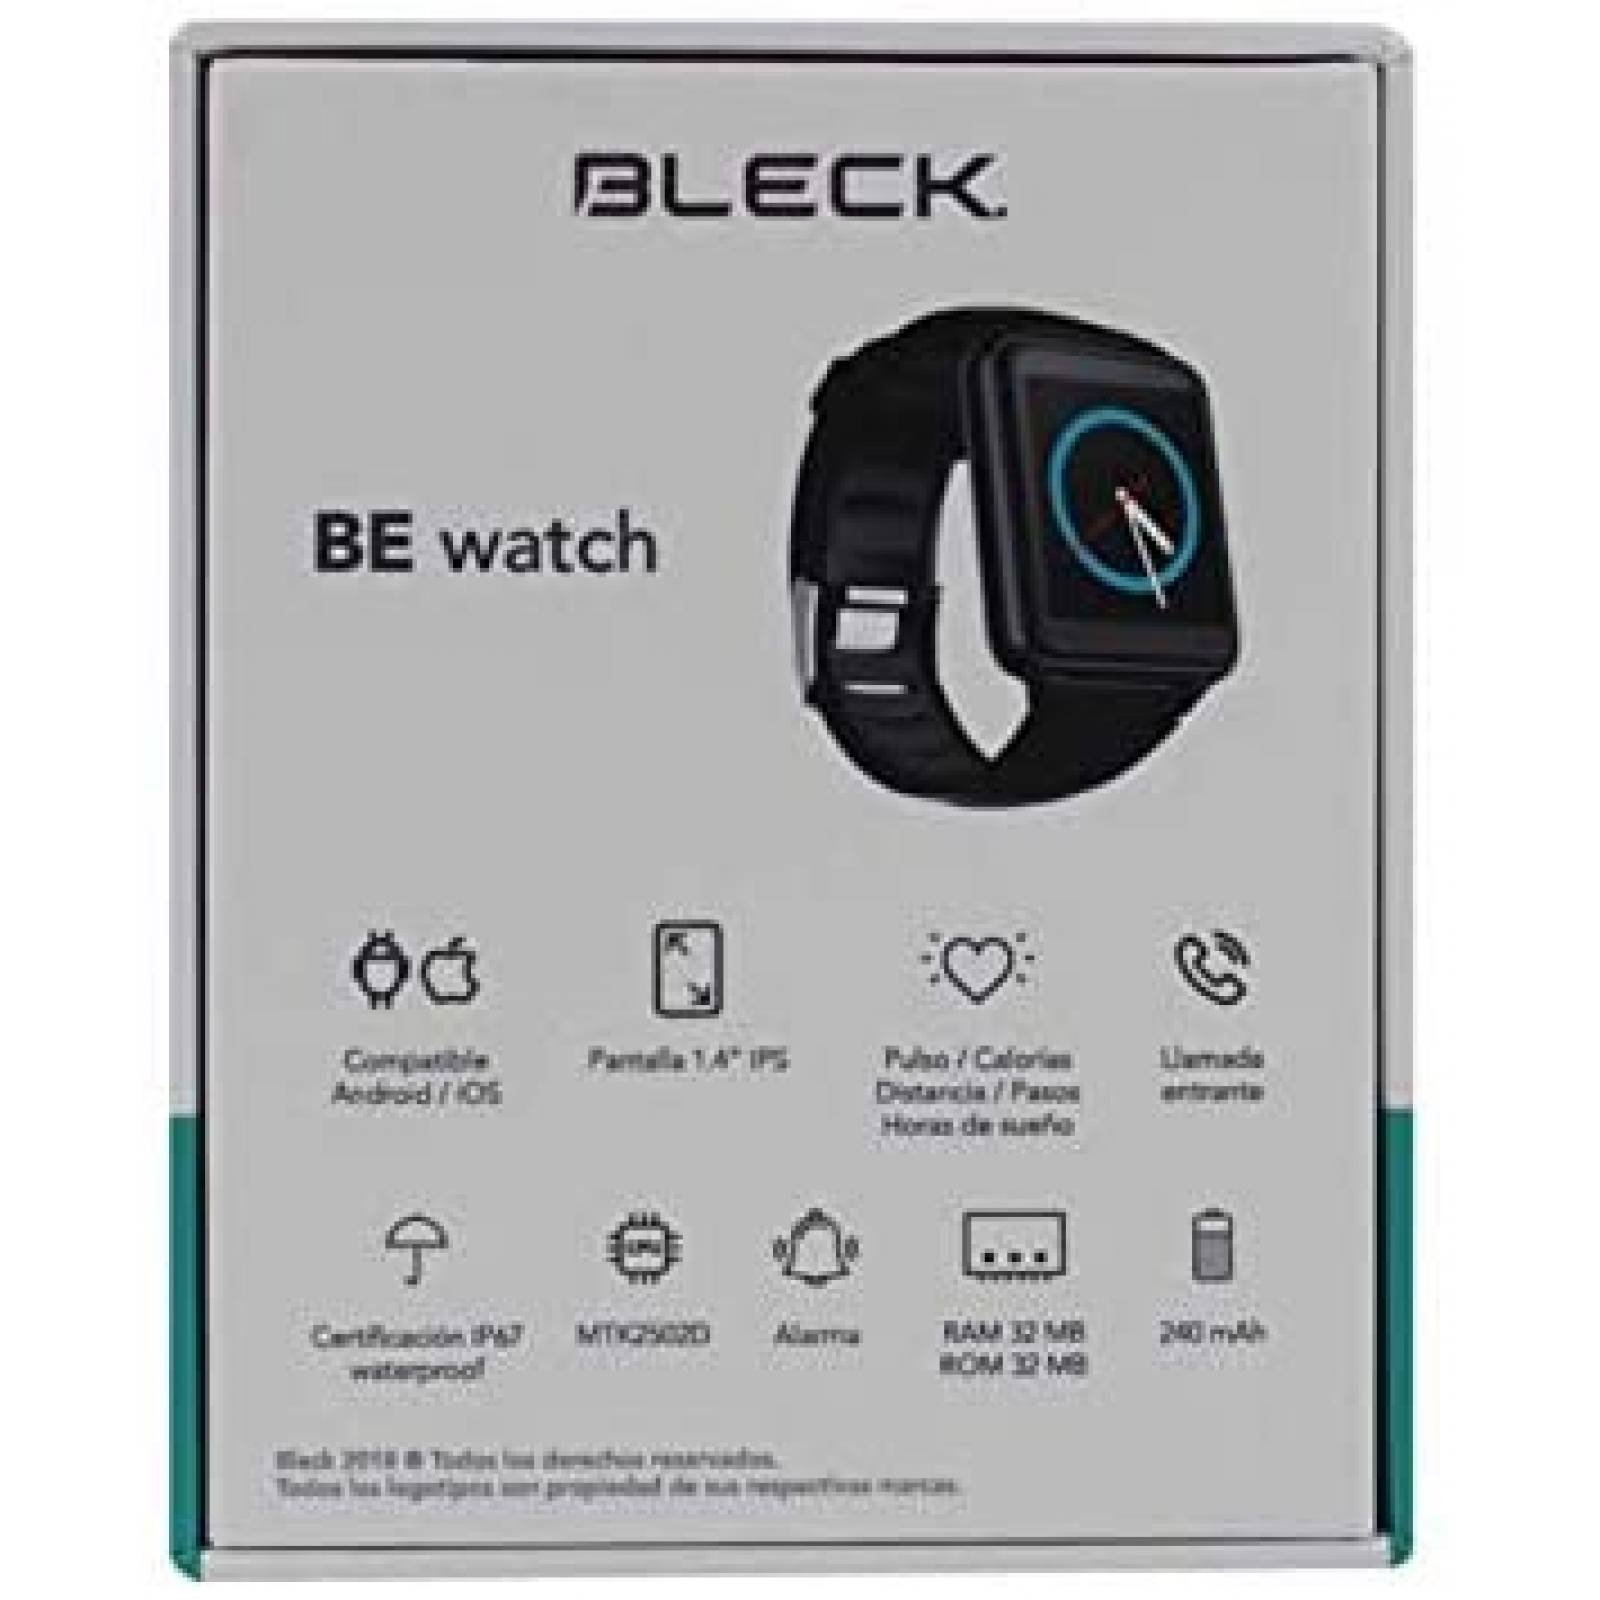 Smartwatch Bleck Acteck Modelo Be Watch 1 44 Led   32 Mb Ram